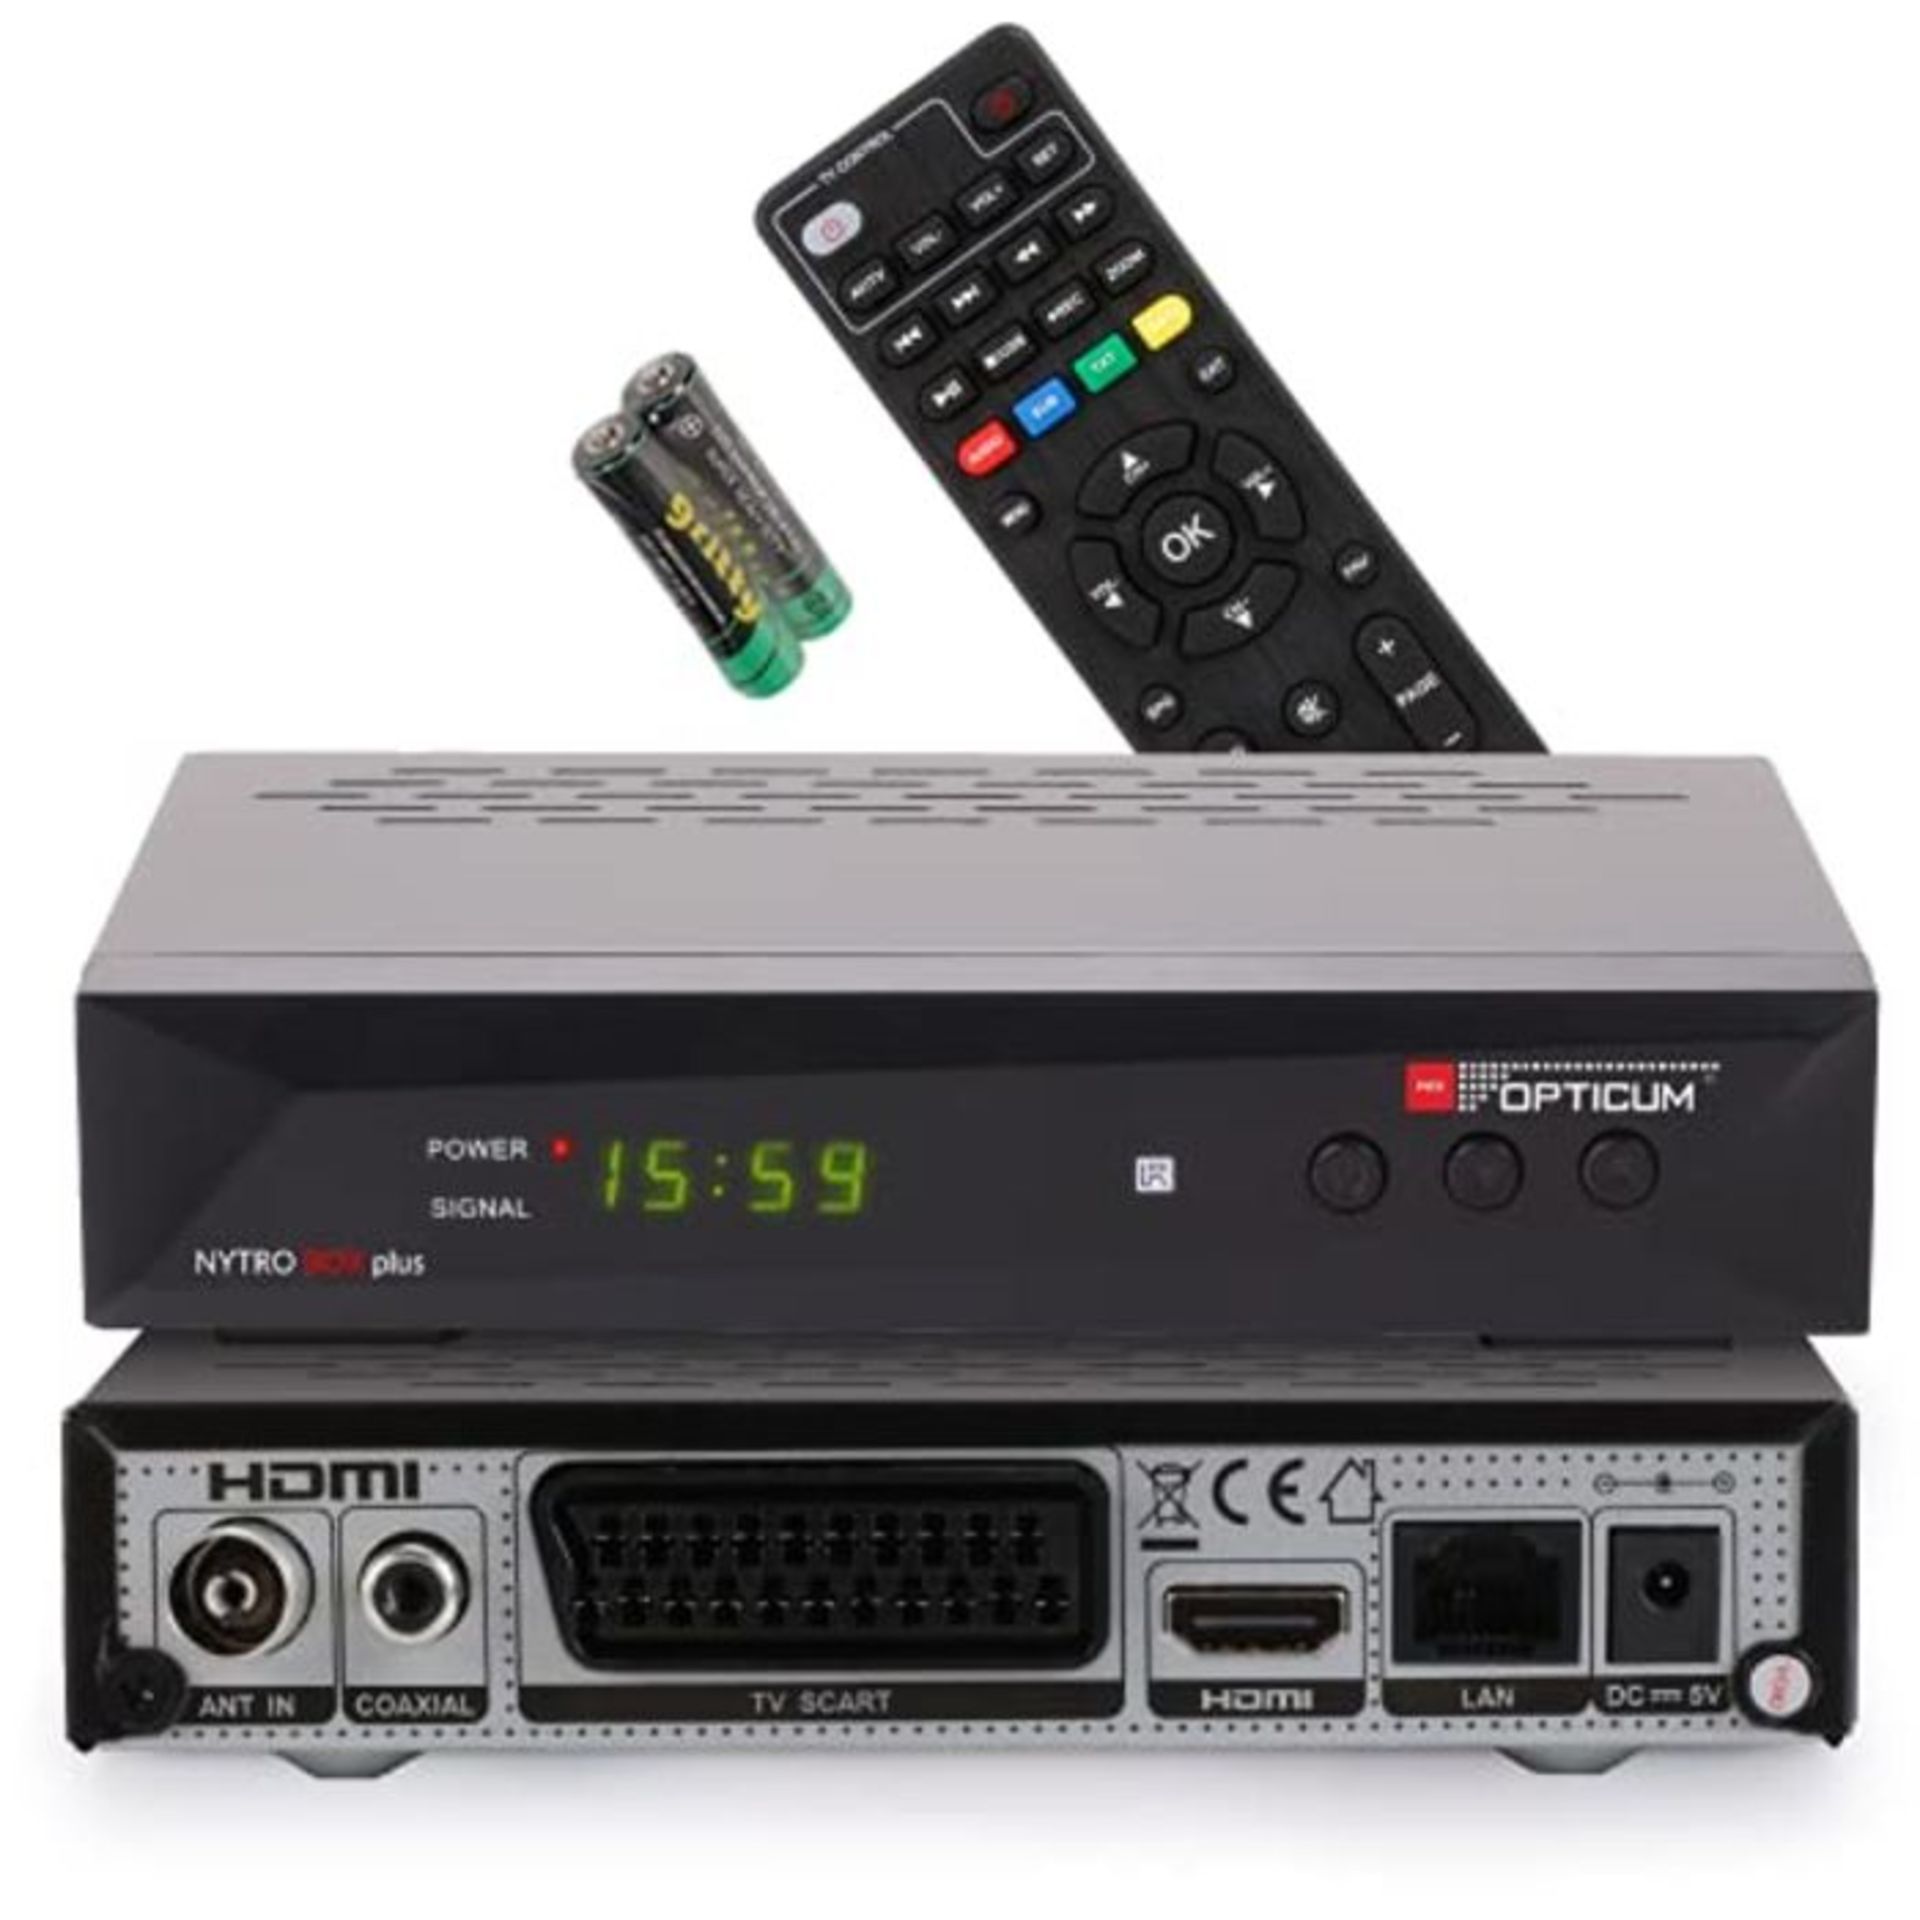 Red Opticum Nytro Box Plus Full HD DVB-T2 and DVB-C Hybrid Receiver with USB Recording